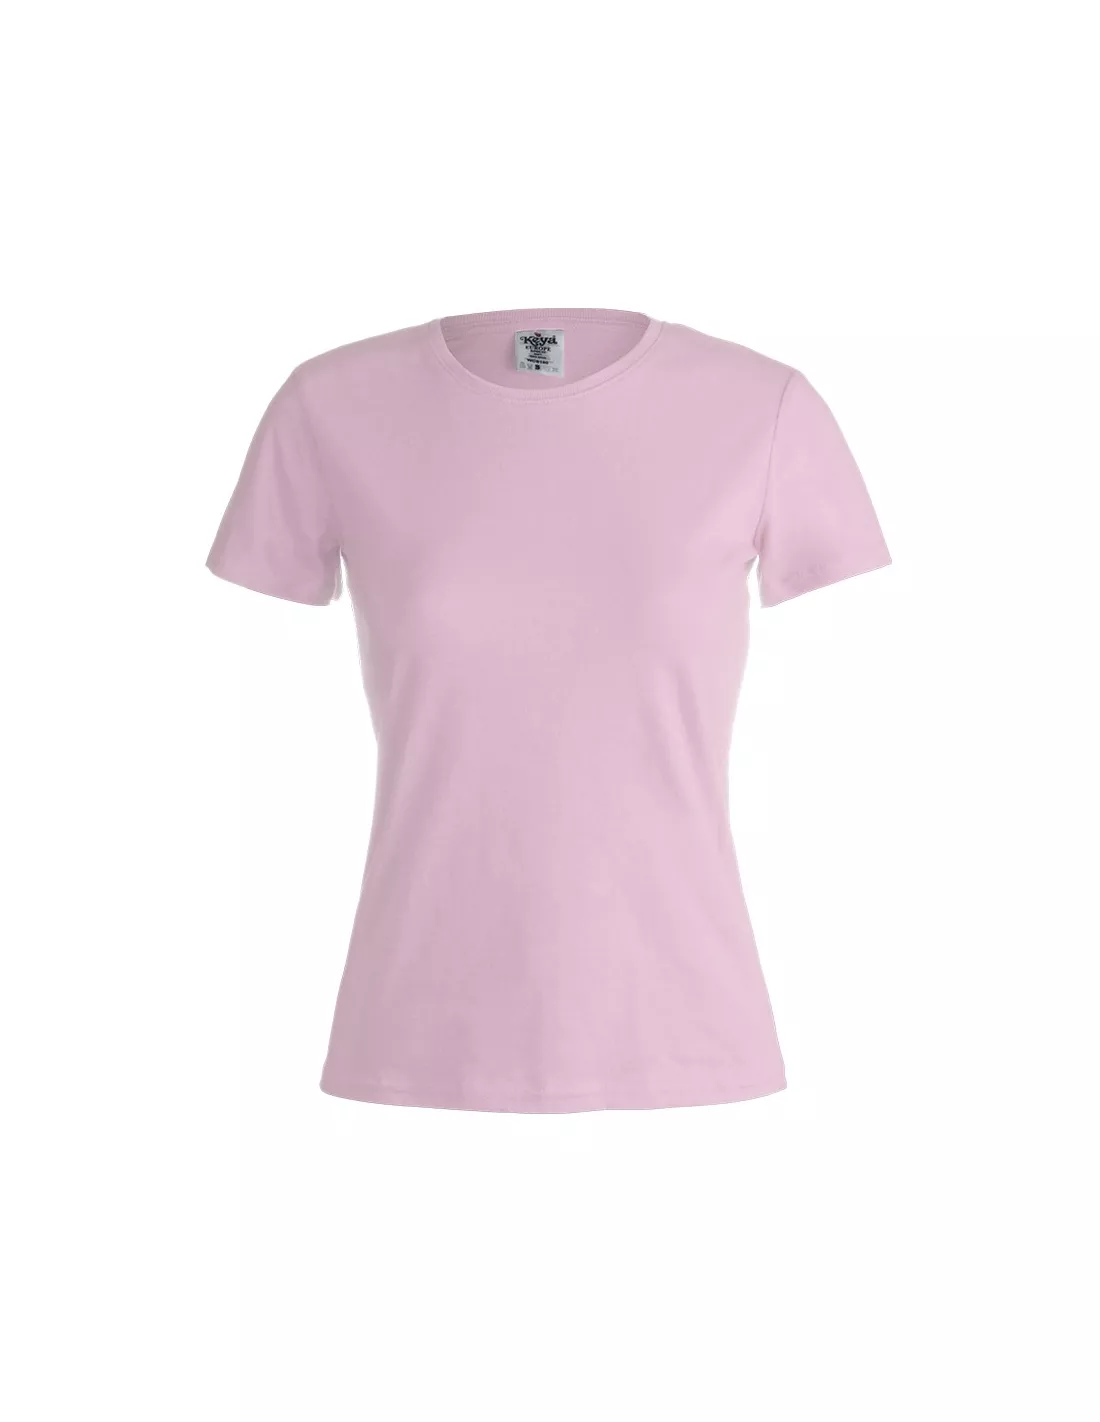 Camiseta Mujer Color "keya" WCS180